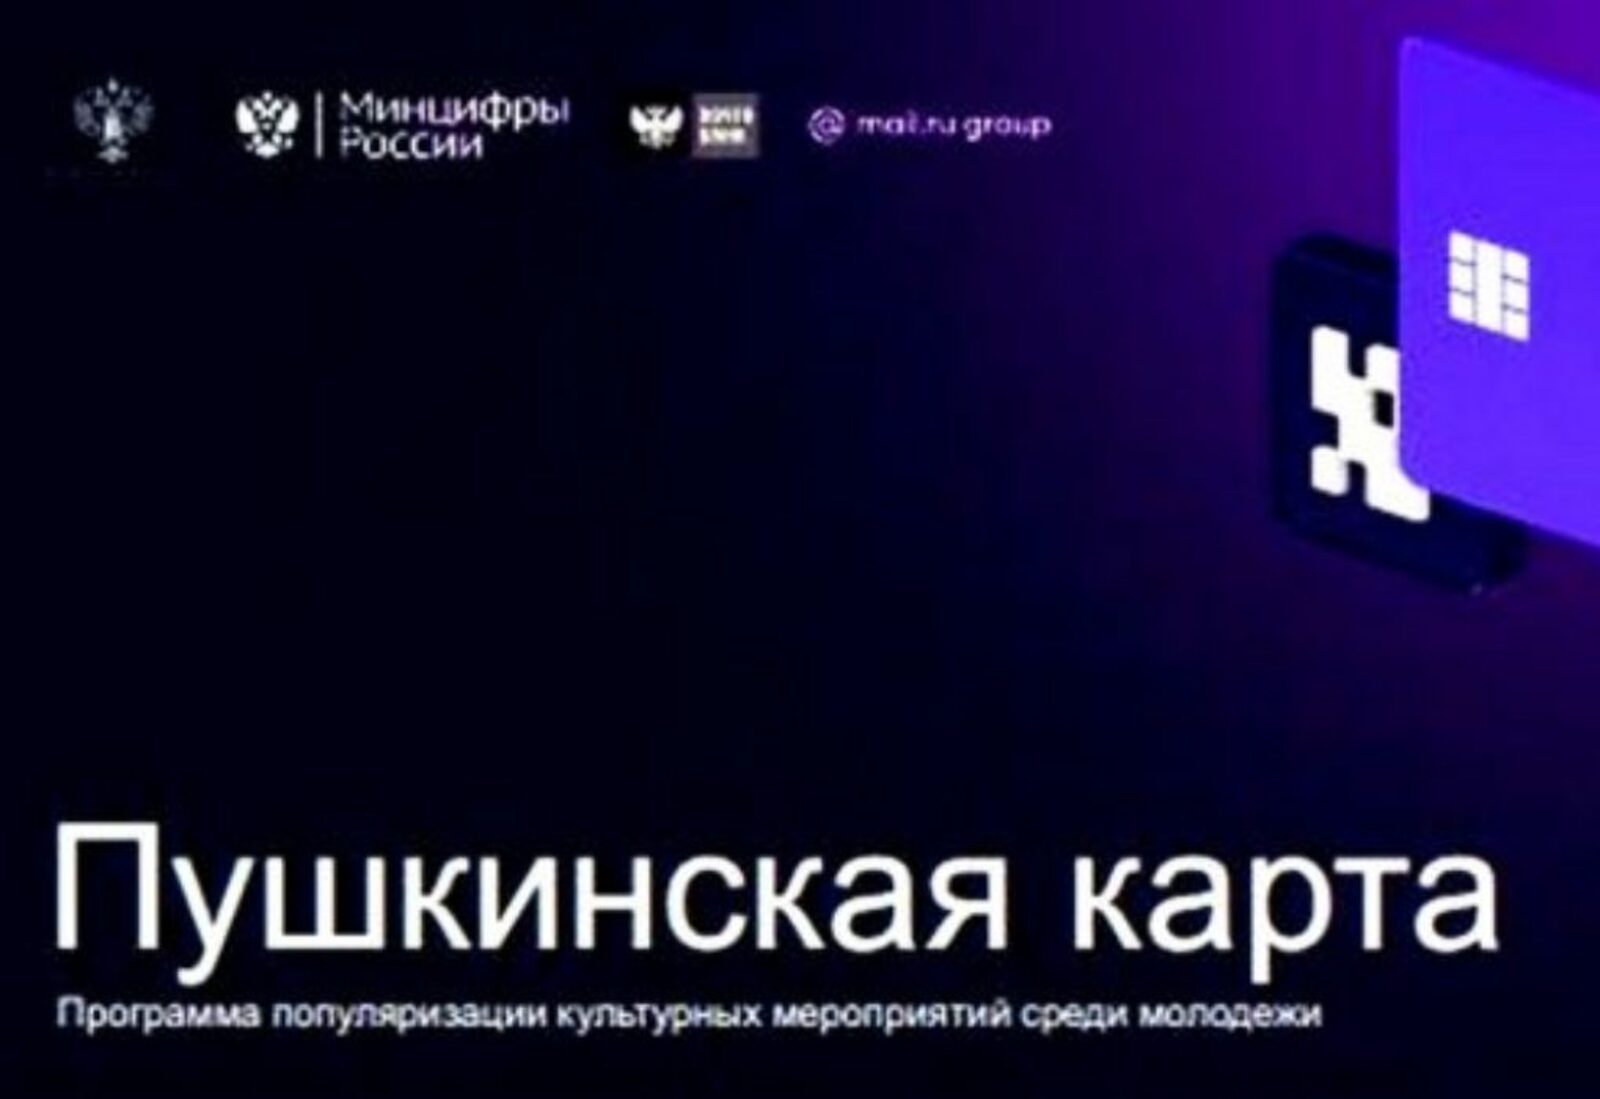 В Пушкинском музее презентуют культурную программу «Пушкинская карта»